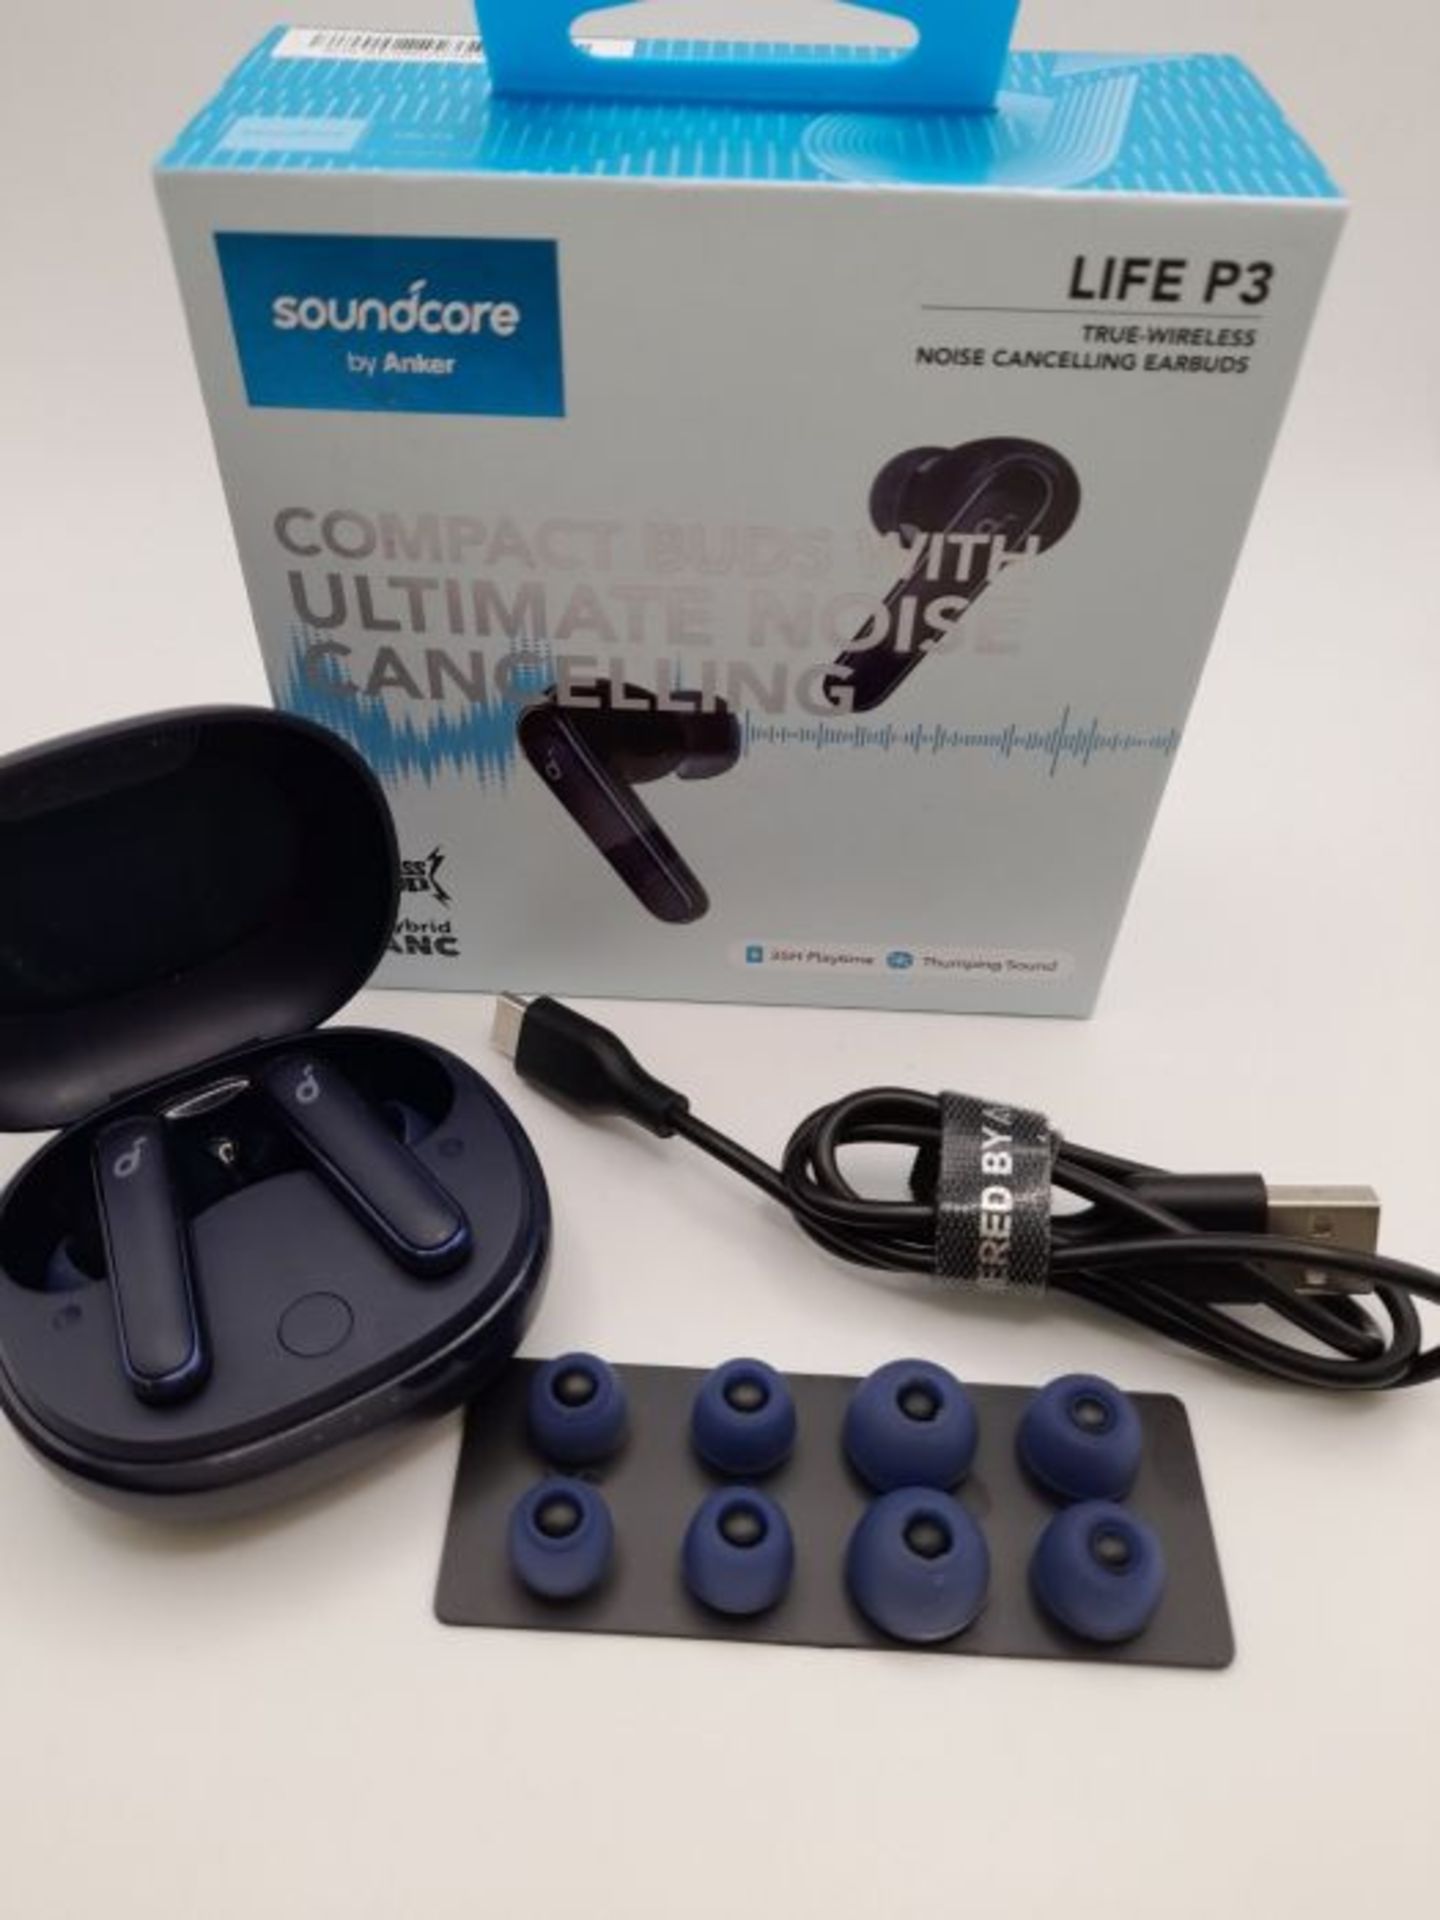 RRP £62.00 â¬ 9 â¬ 9 Soundcore Life P3 Bluetooth KopfhÃ¶rer mit GerÃ¤uschunterdrÃ¼cku - Image 2 of 3